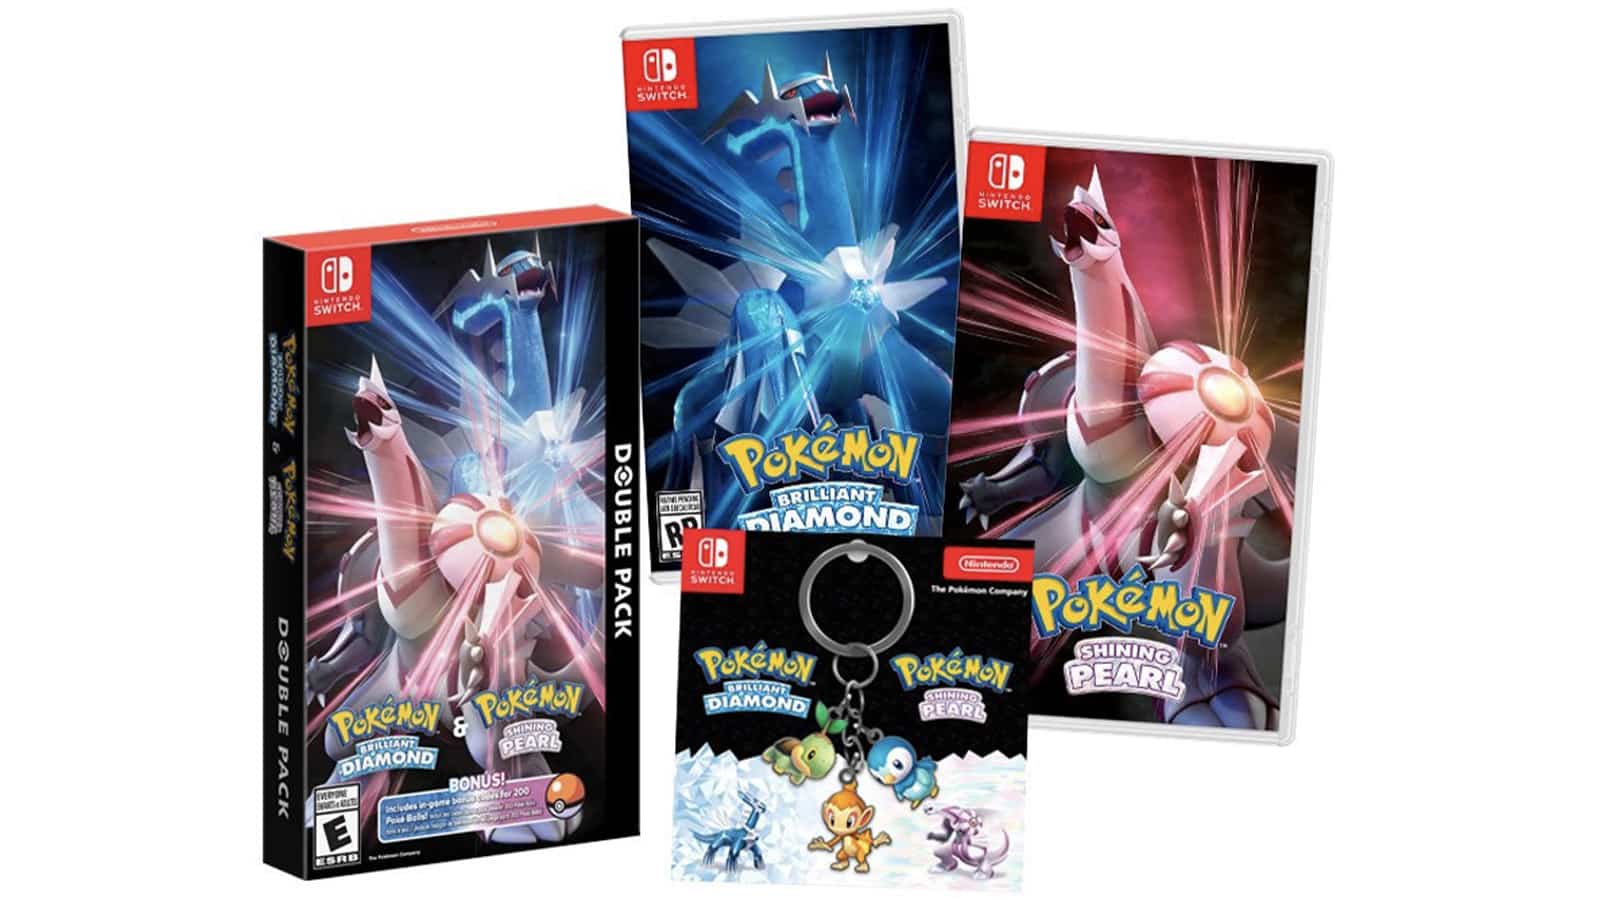 Pokémon Brilliant Diamond e Pokémon Shining Pearl, Bónus, Website oficial